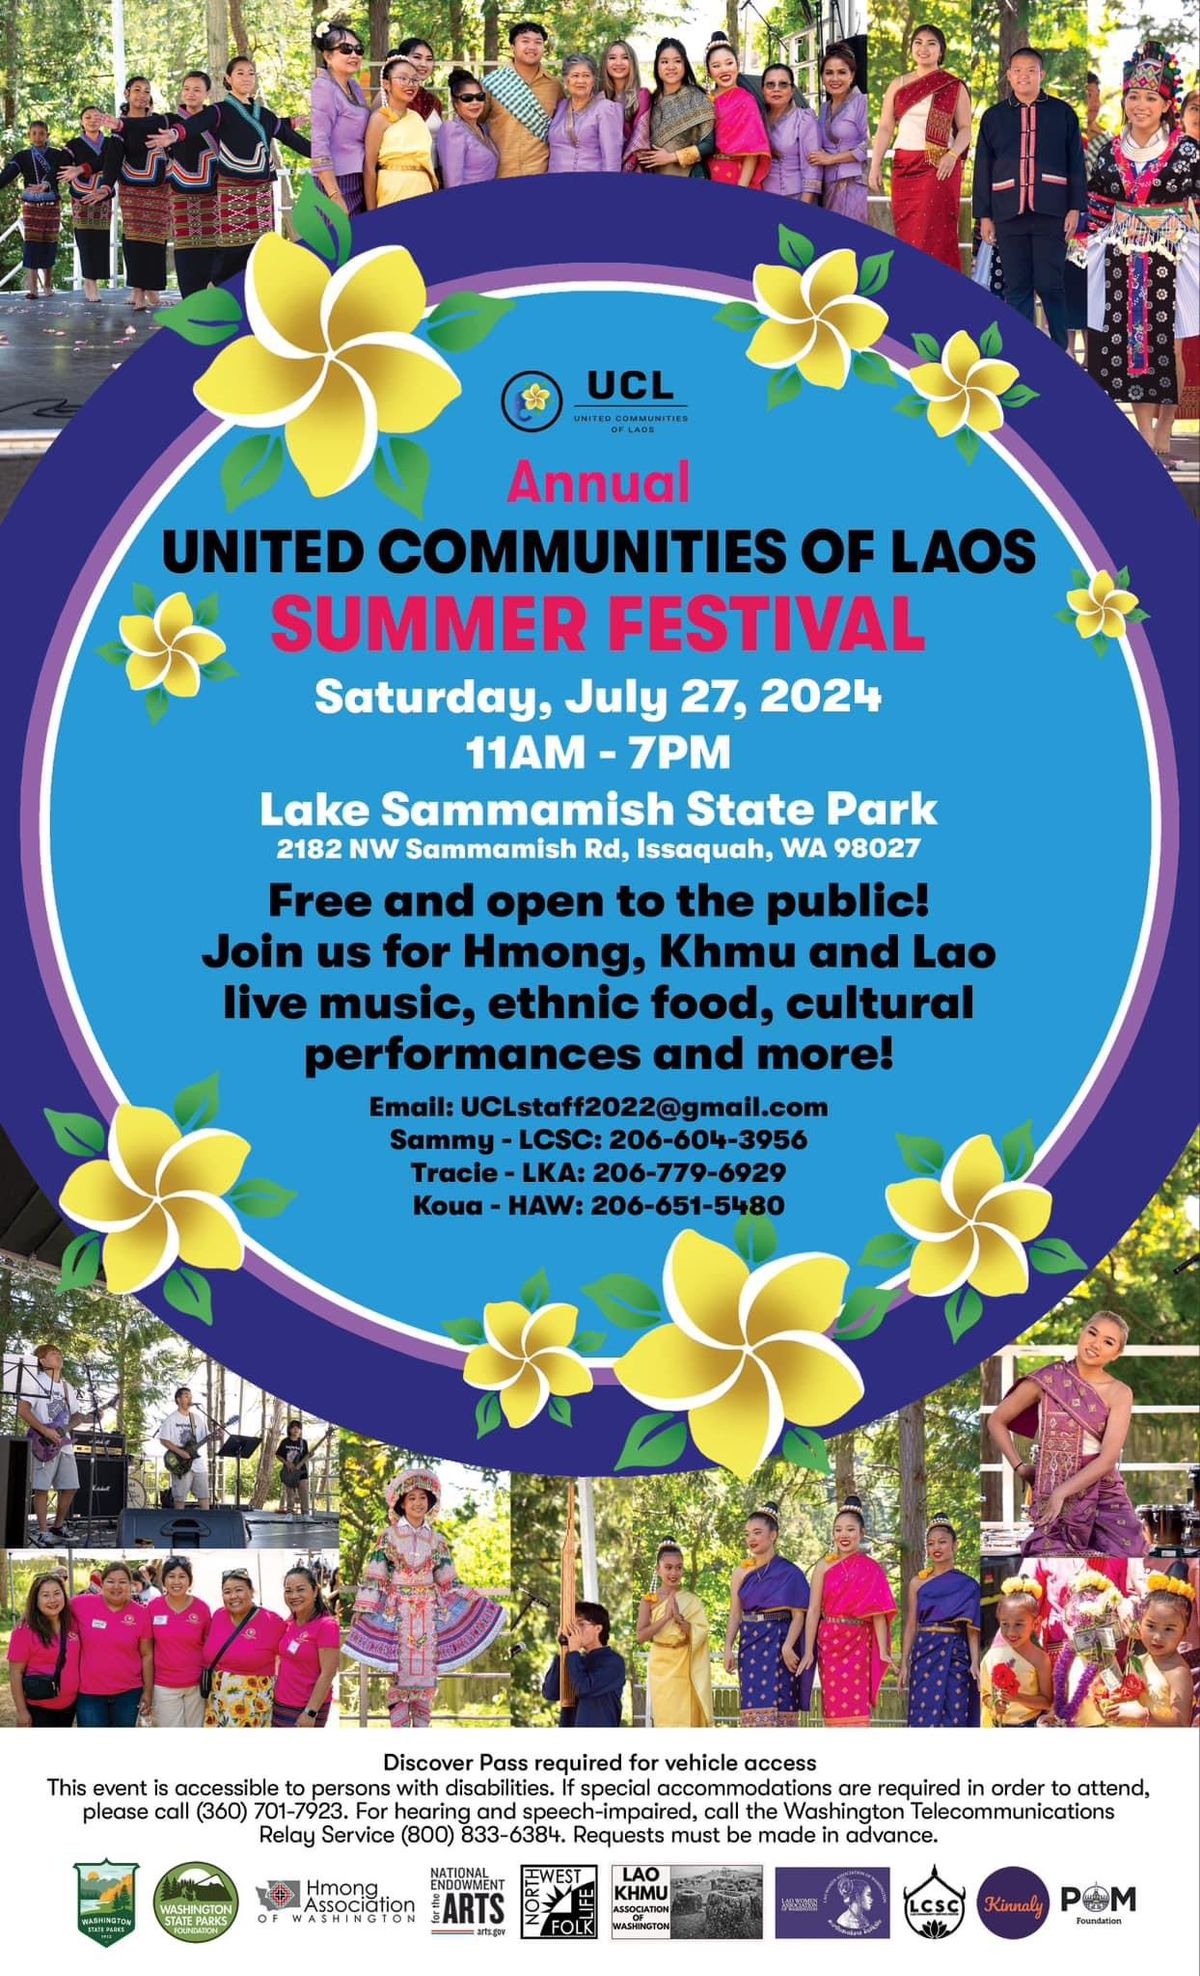 United Communities of Laos Summer Festival